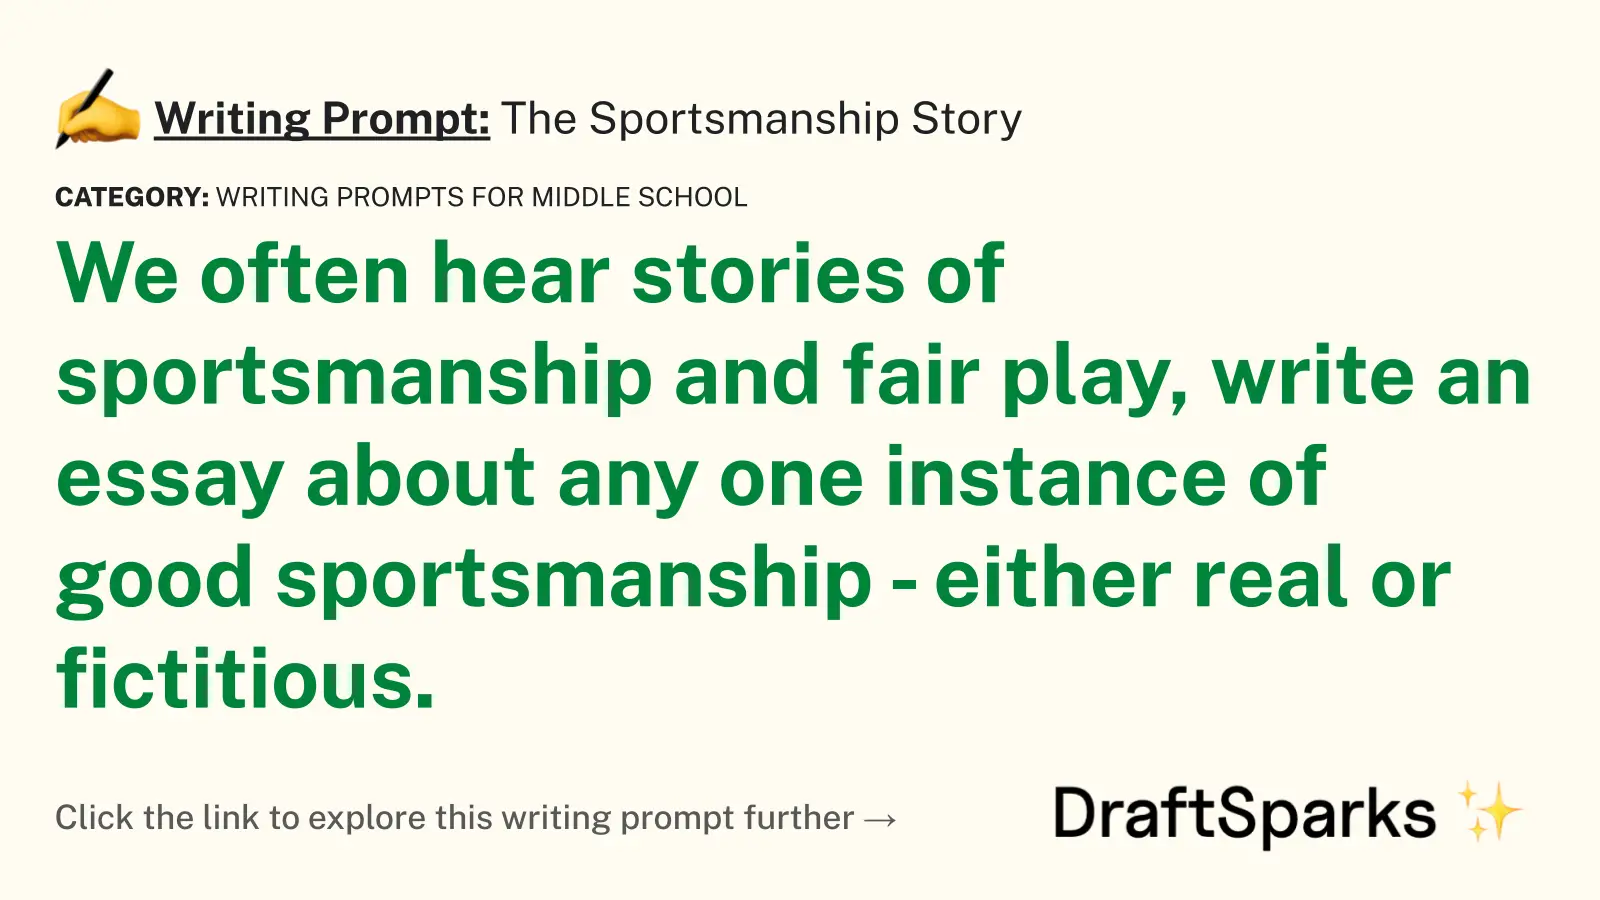 The Sportsmanship Story